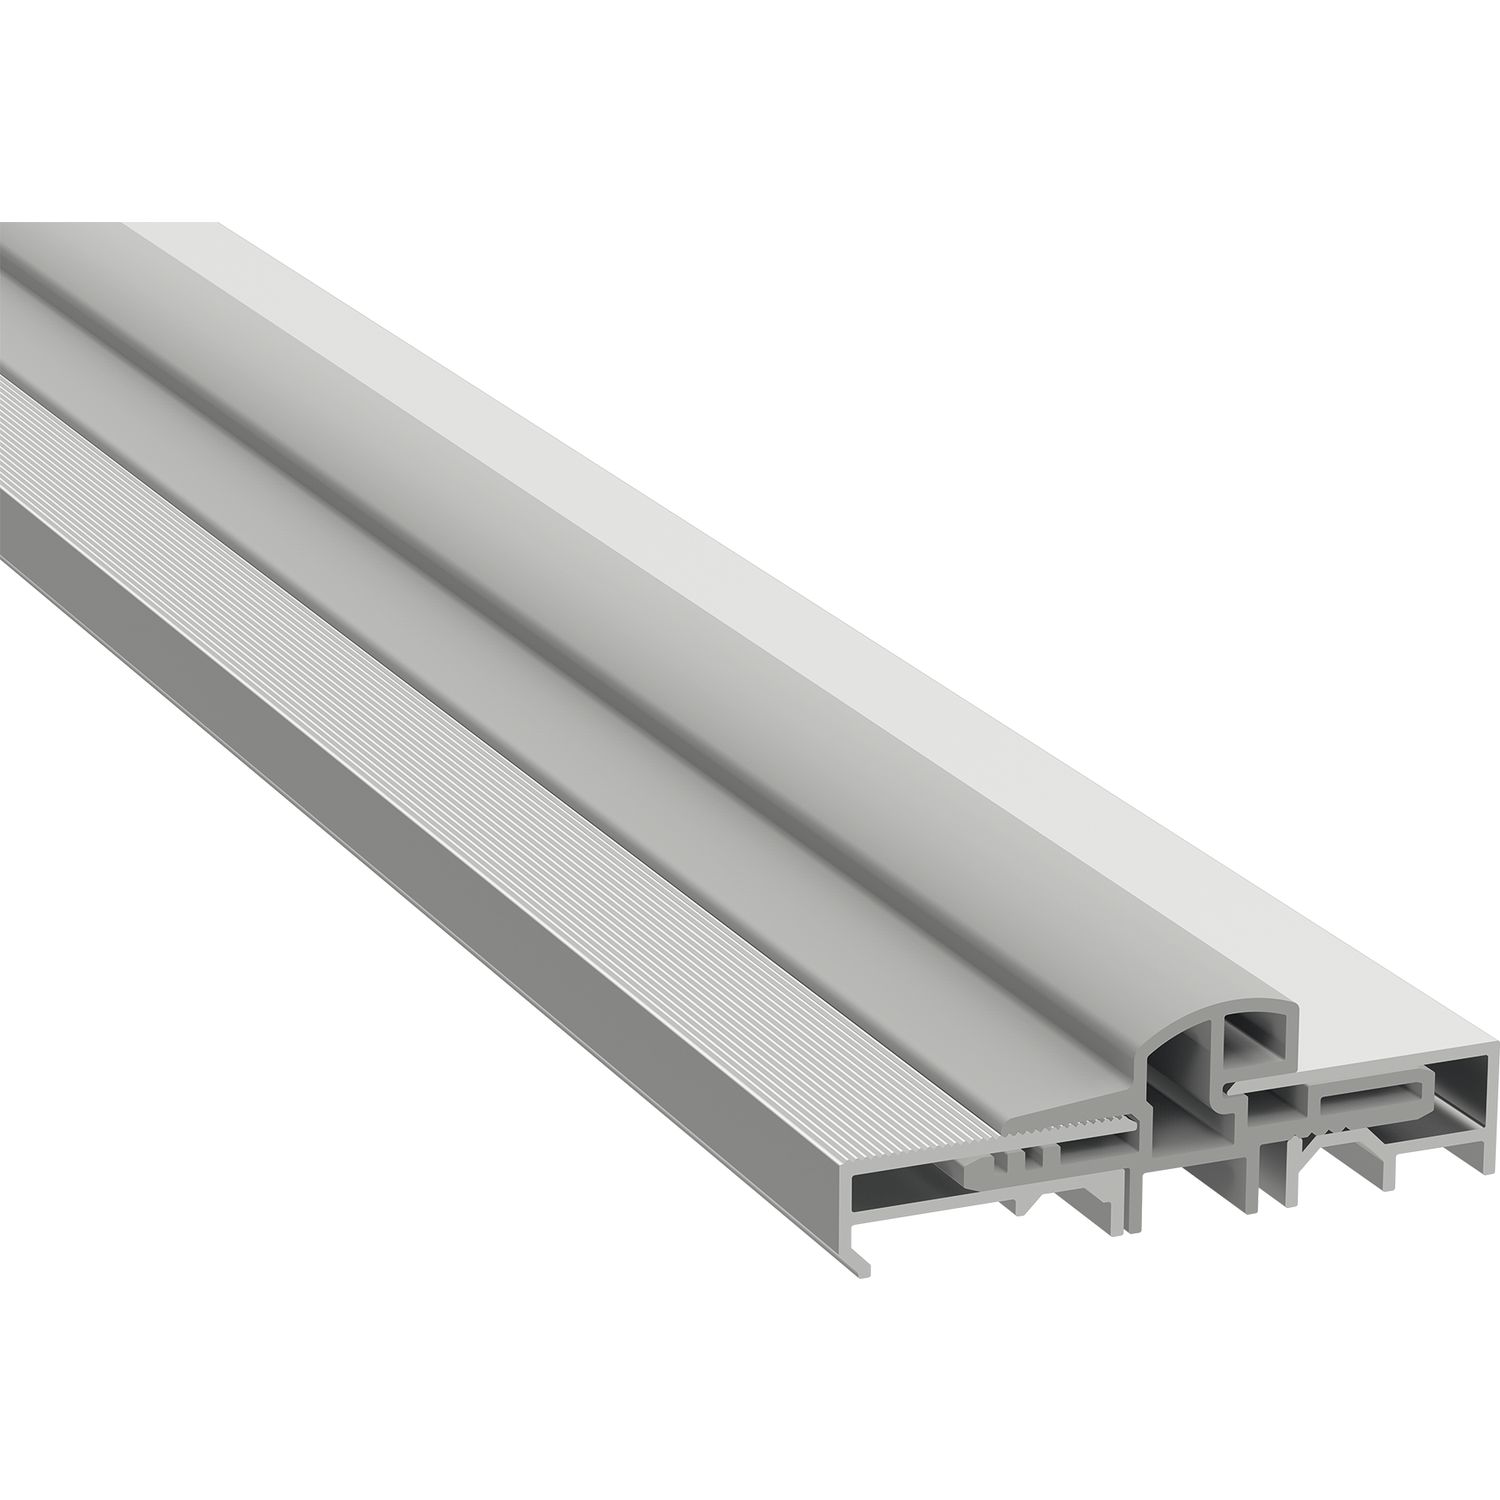 Türschwelle TRANSIT 82 - 100, 5000 mm, Höhe 20 mm, Aluminium